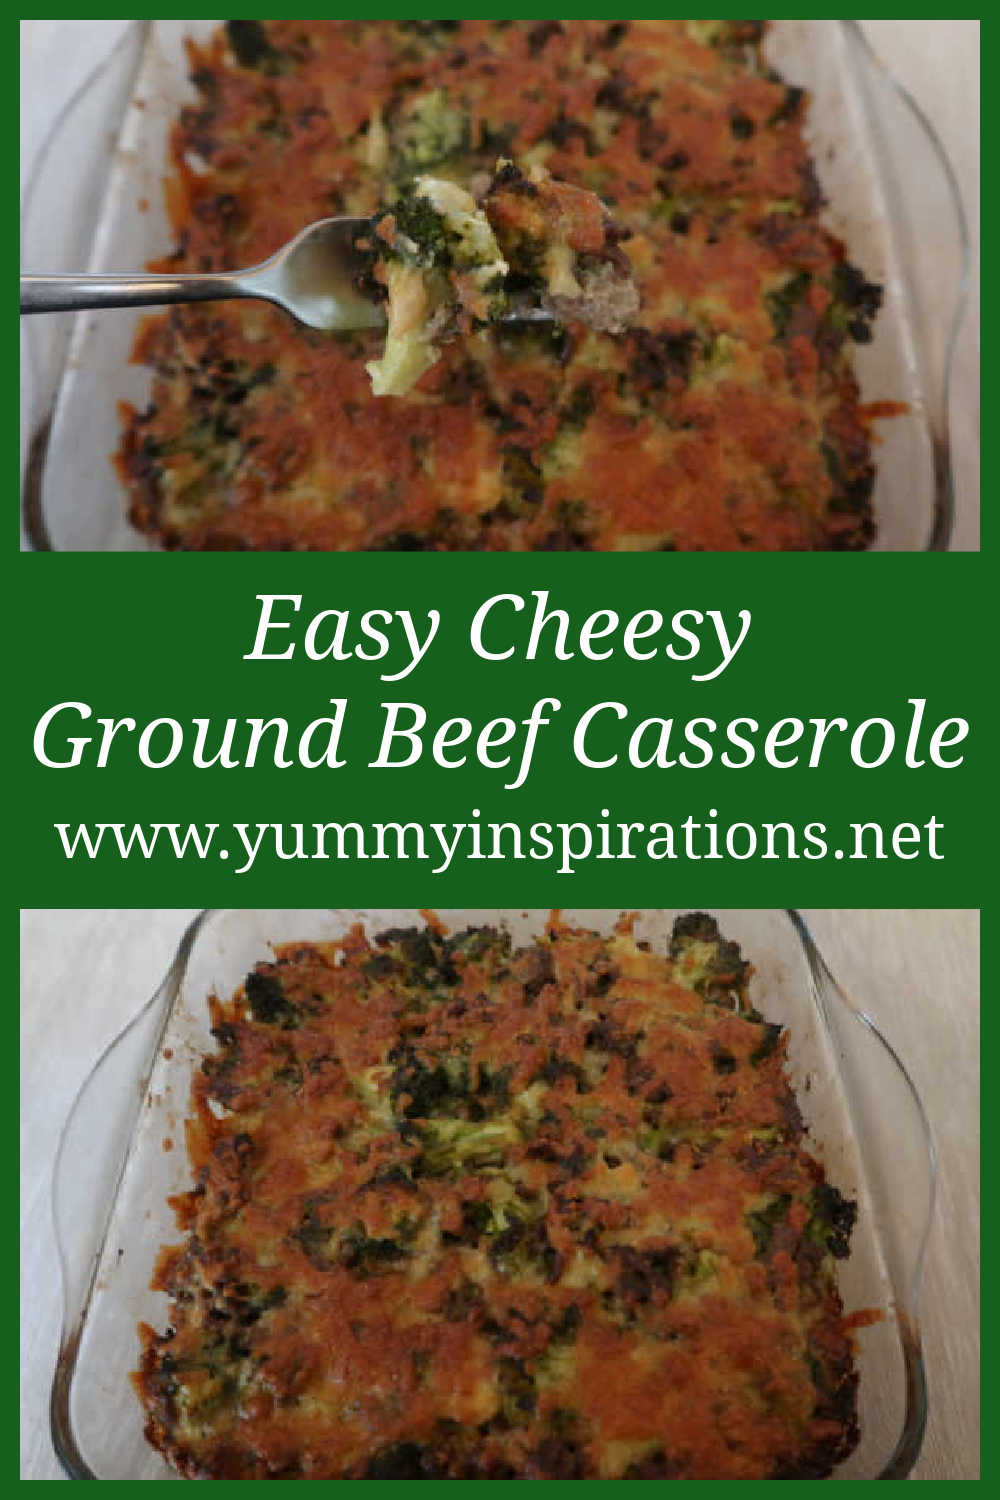 Easy Ground Beef Casserole Recipe - Cheesy Family Dinner